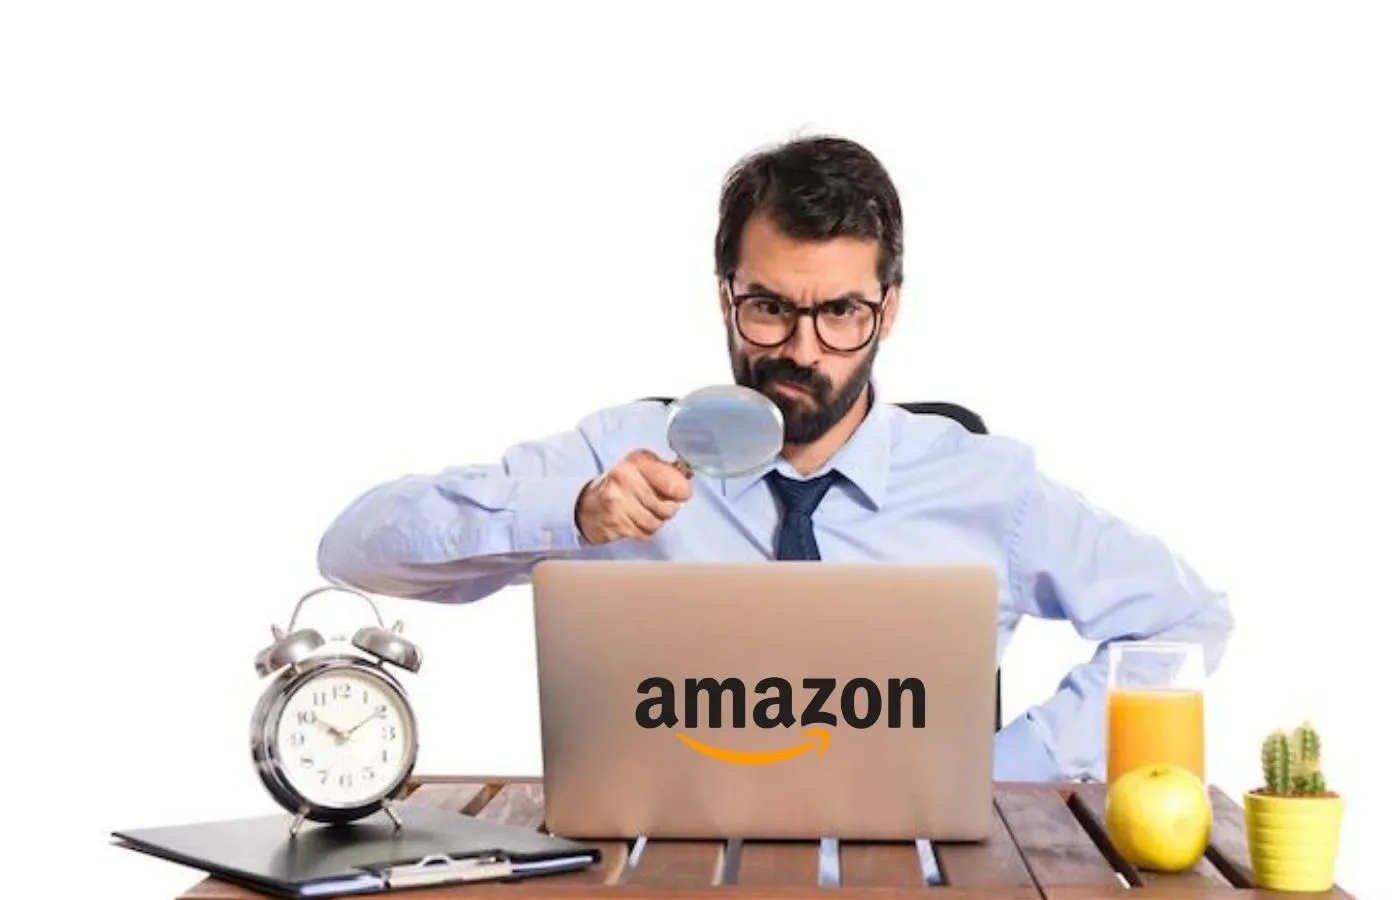 Amazon Interview Preparation in 3 Steps